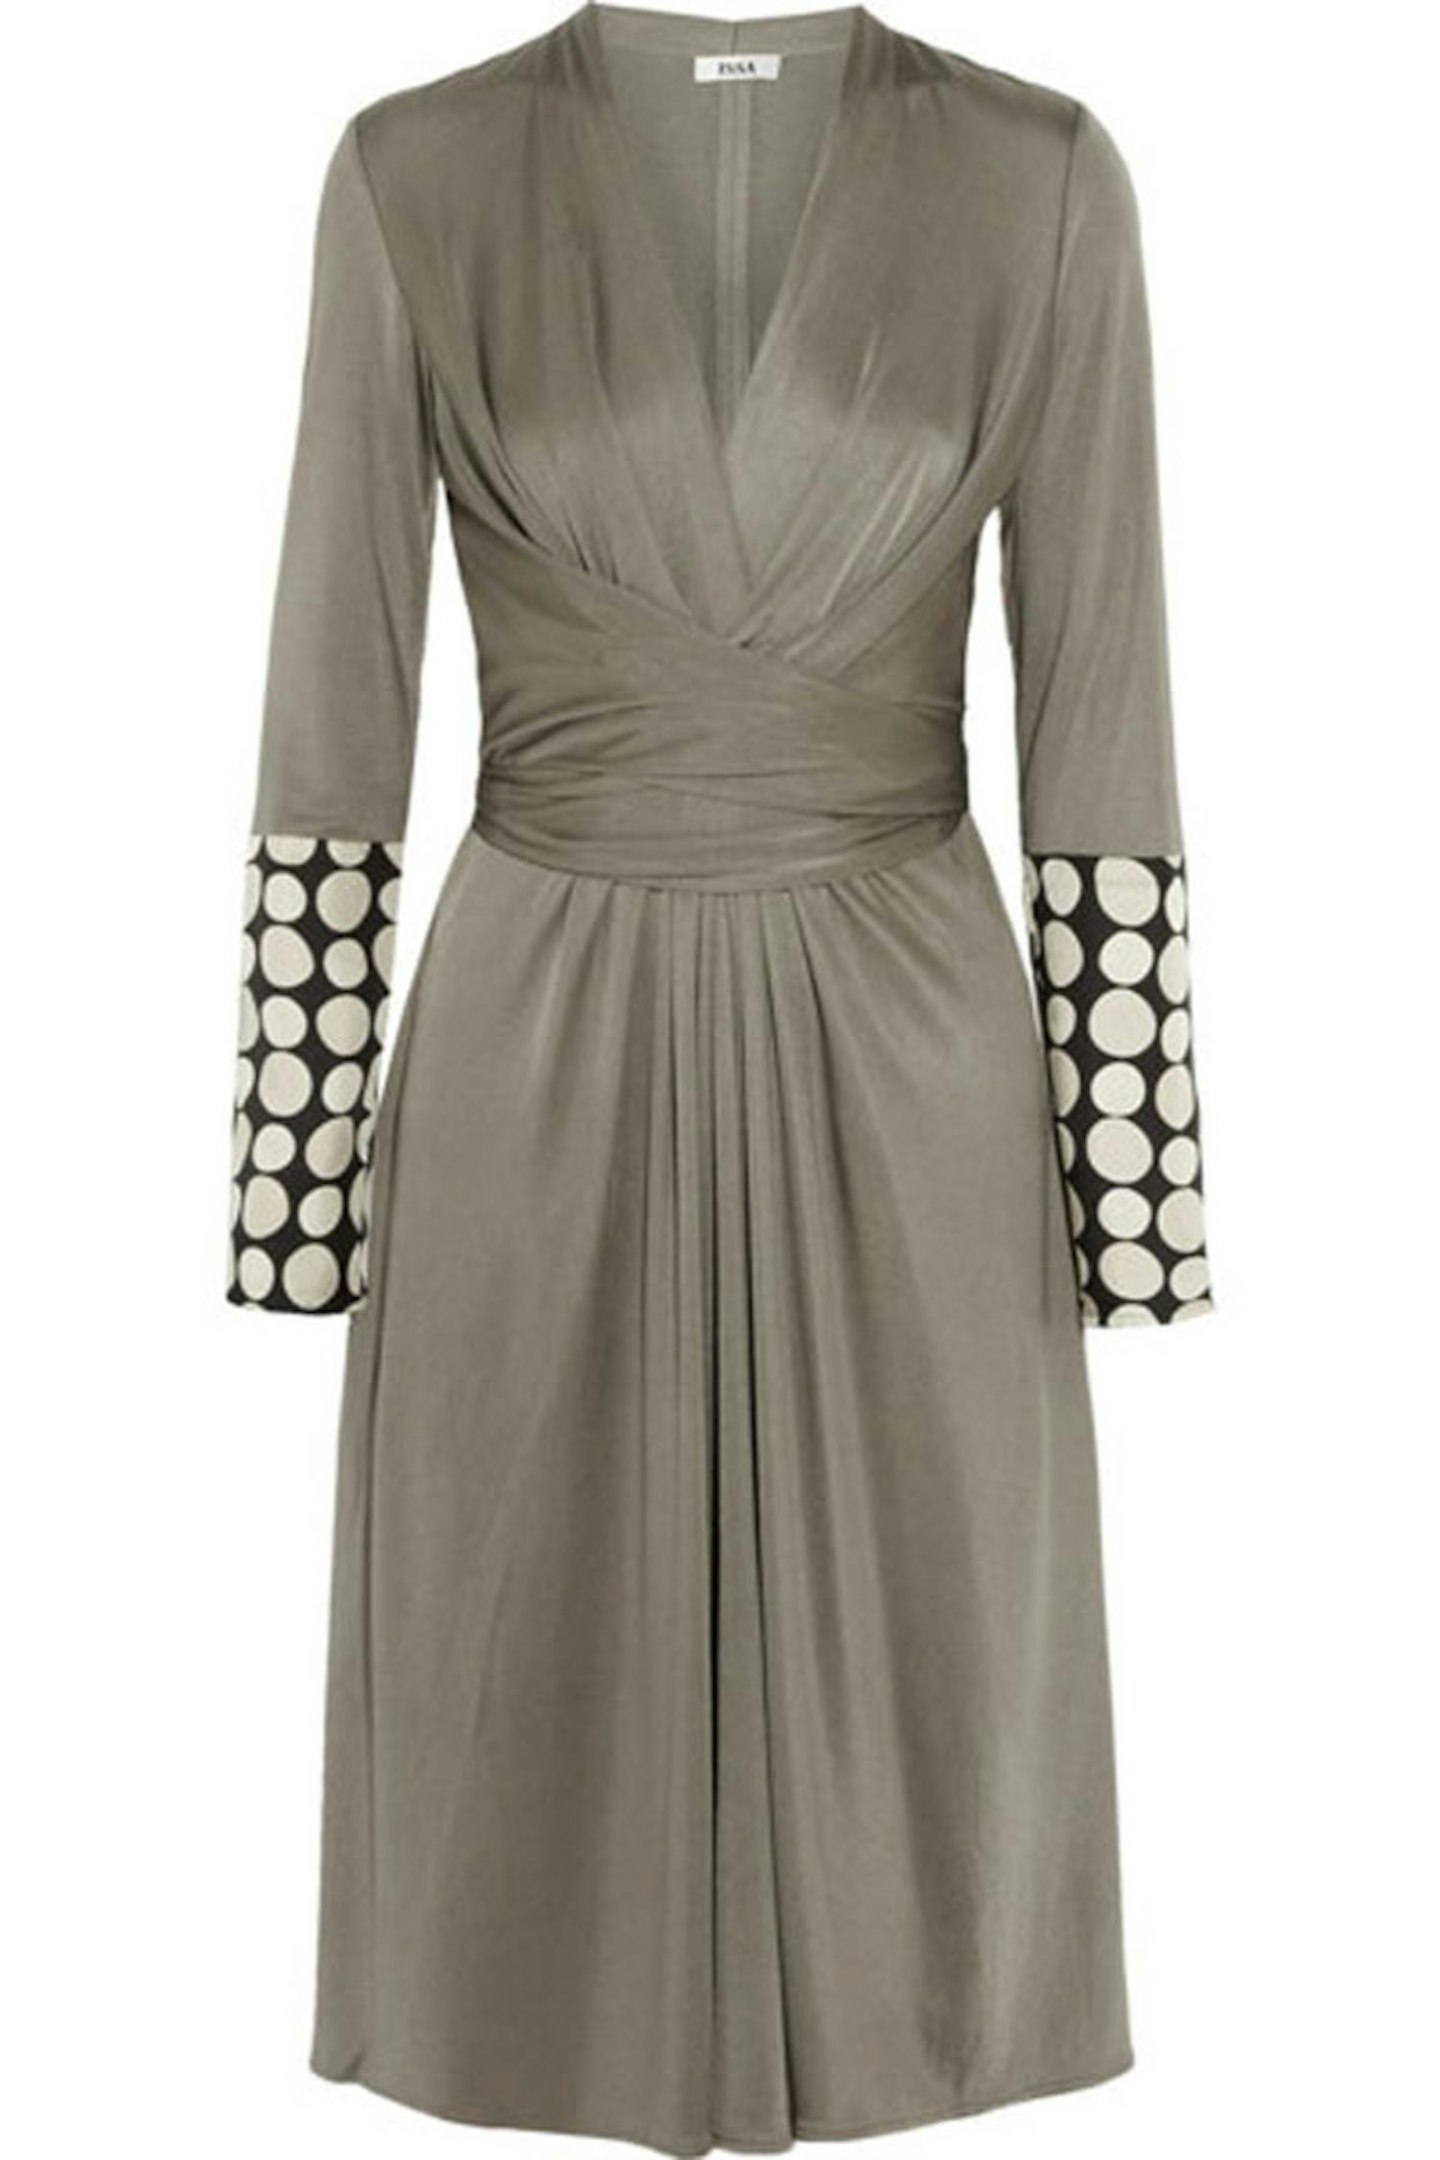 Grey Silk Dress with Cuff Detail, £595, Issa at Net-a-Porter